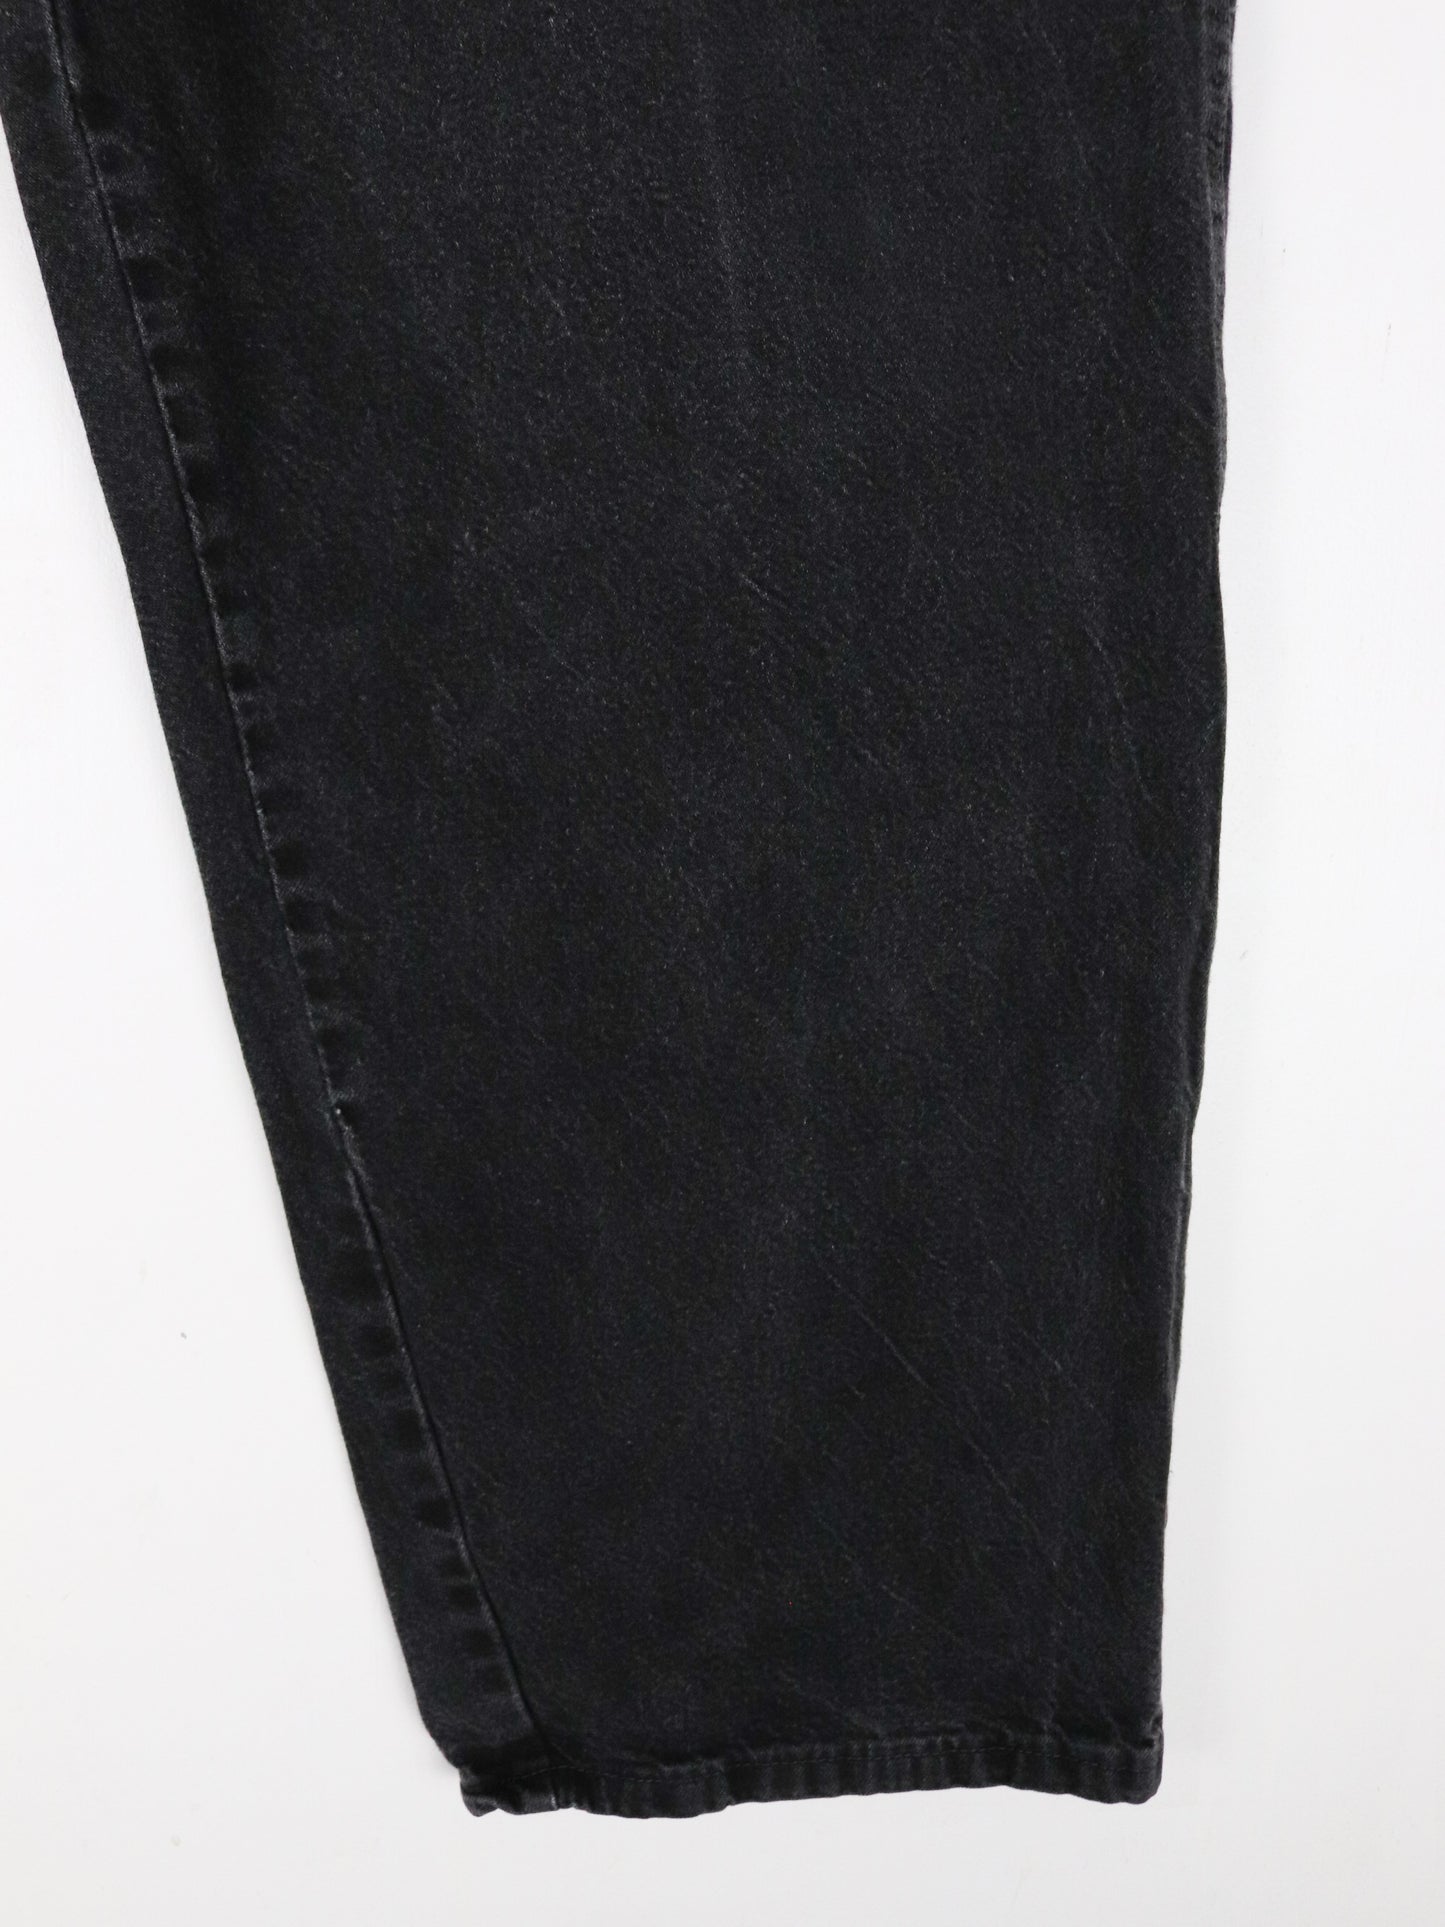 Vintage Wrangler Pants Fits Mens 36 x 30 Black Denim Carpenters